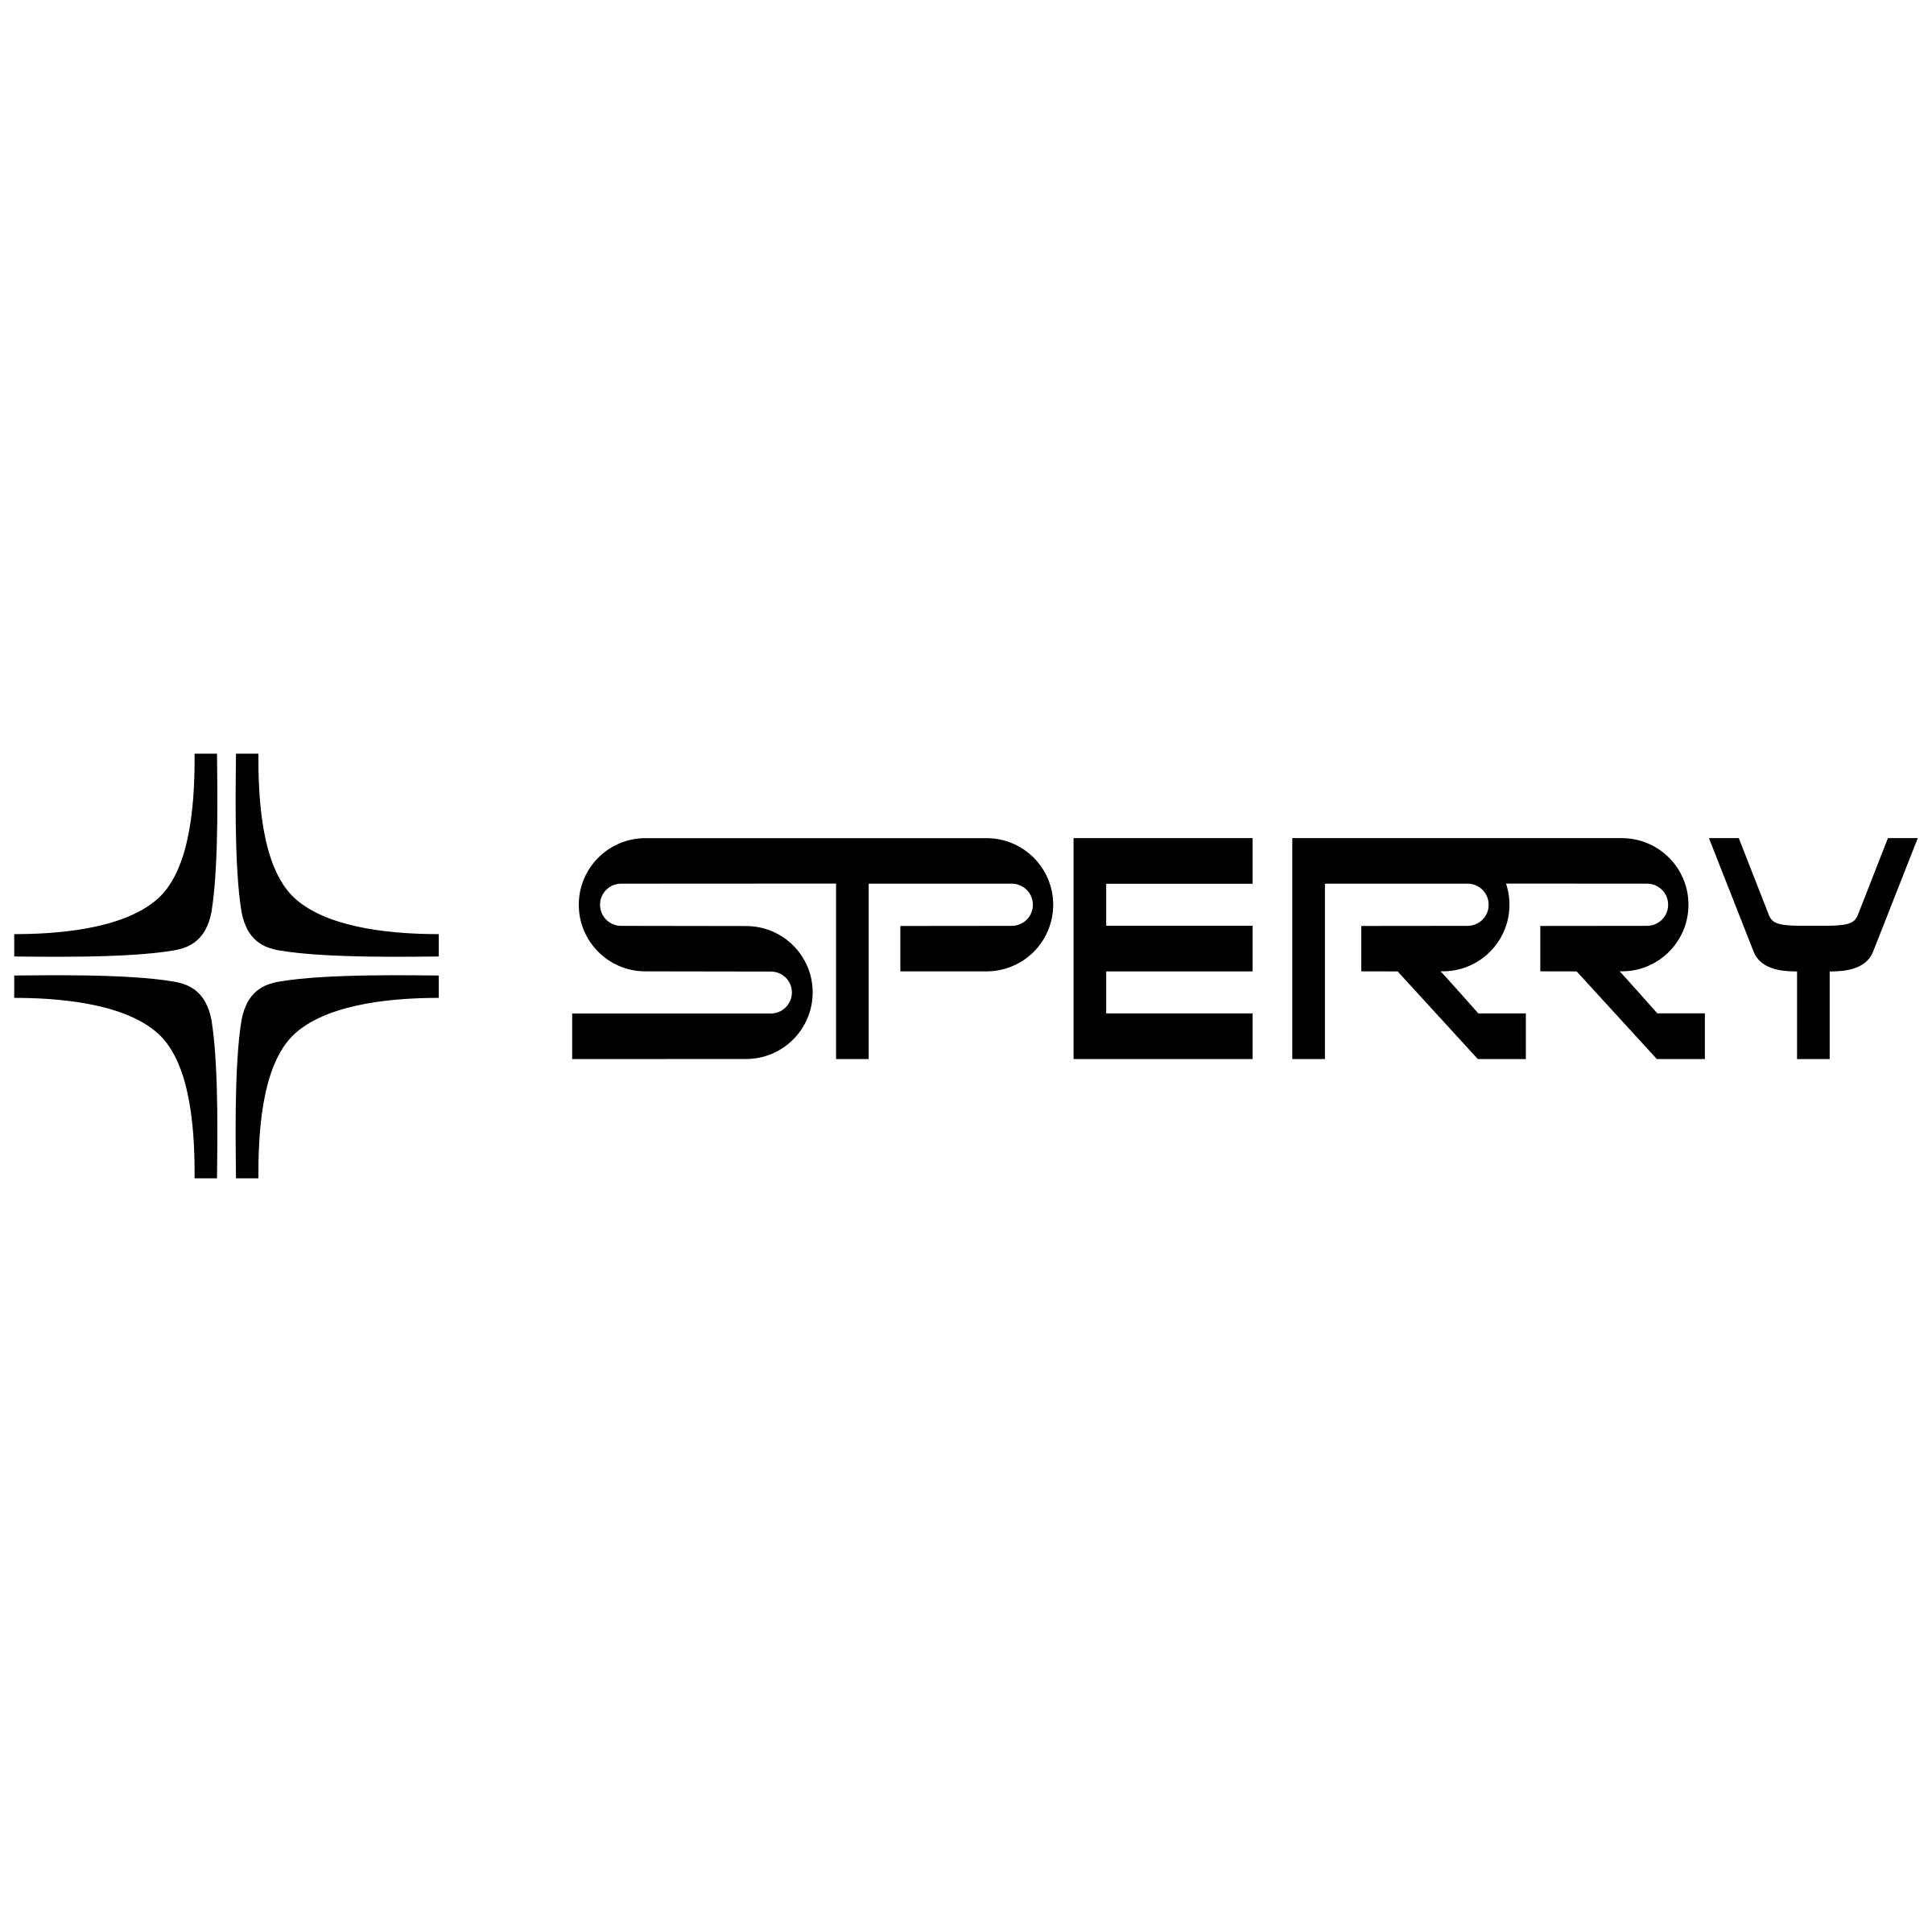 Sperry Logo - Sperry Logo PNG Transparent & SVG Vector - Freebie Supply